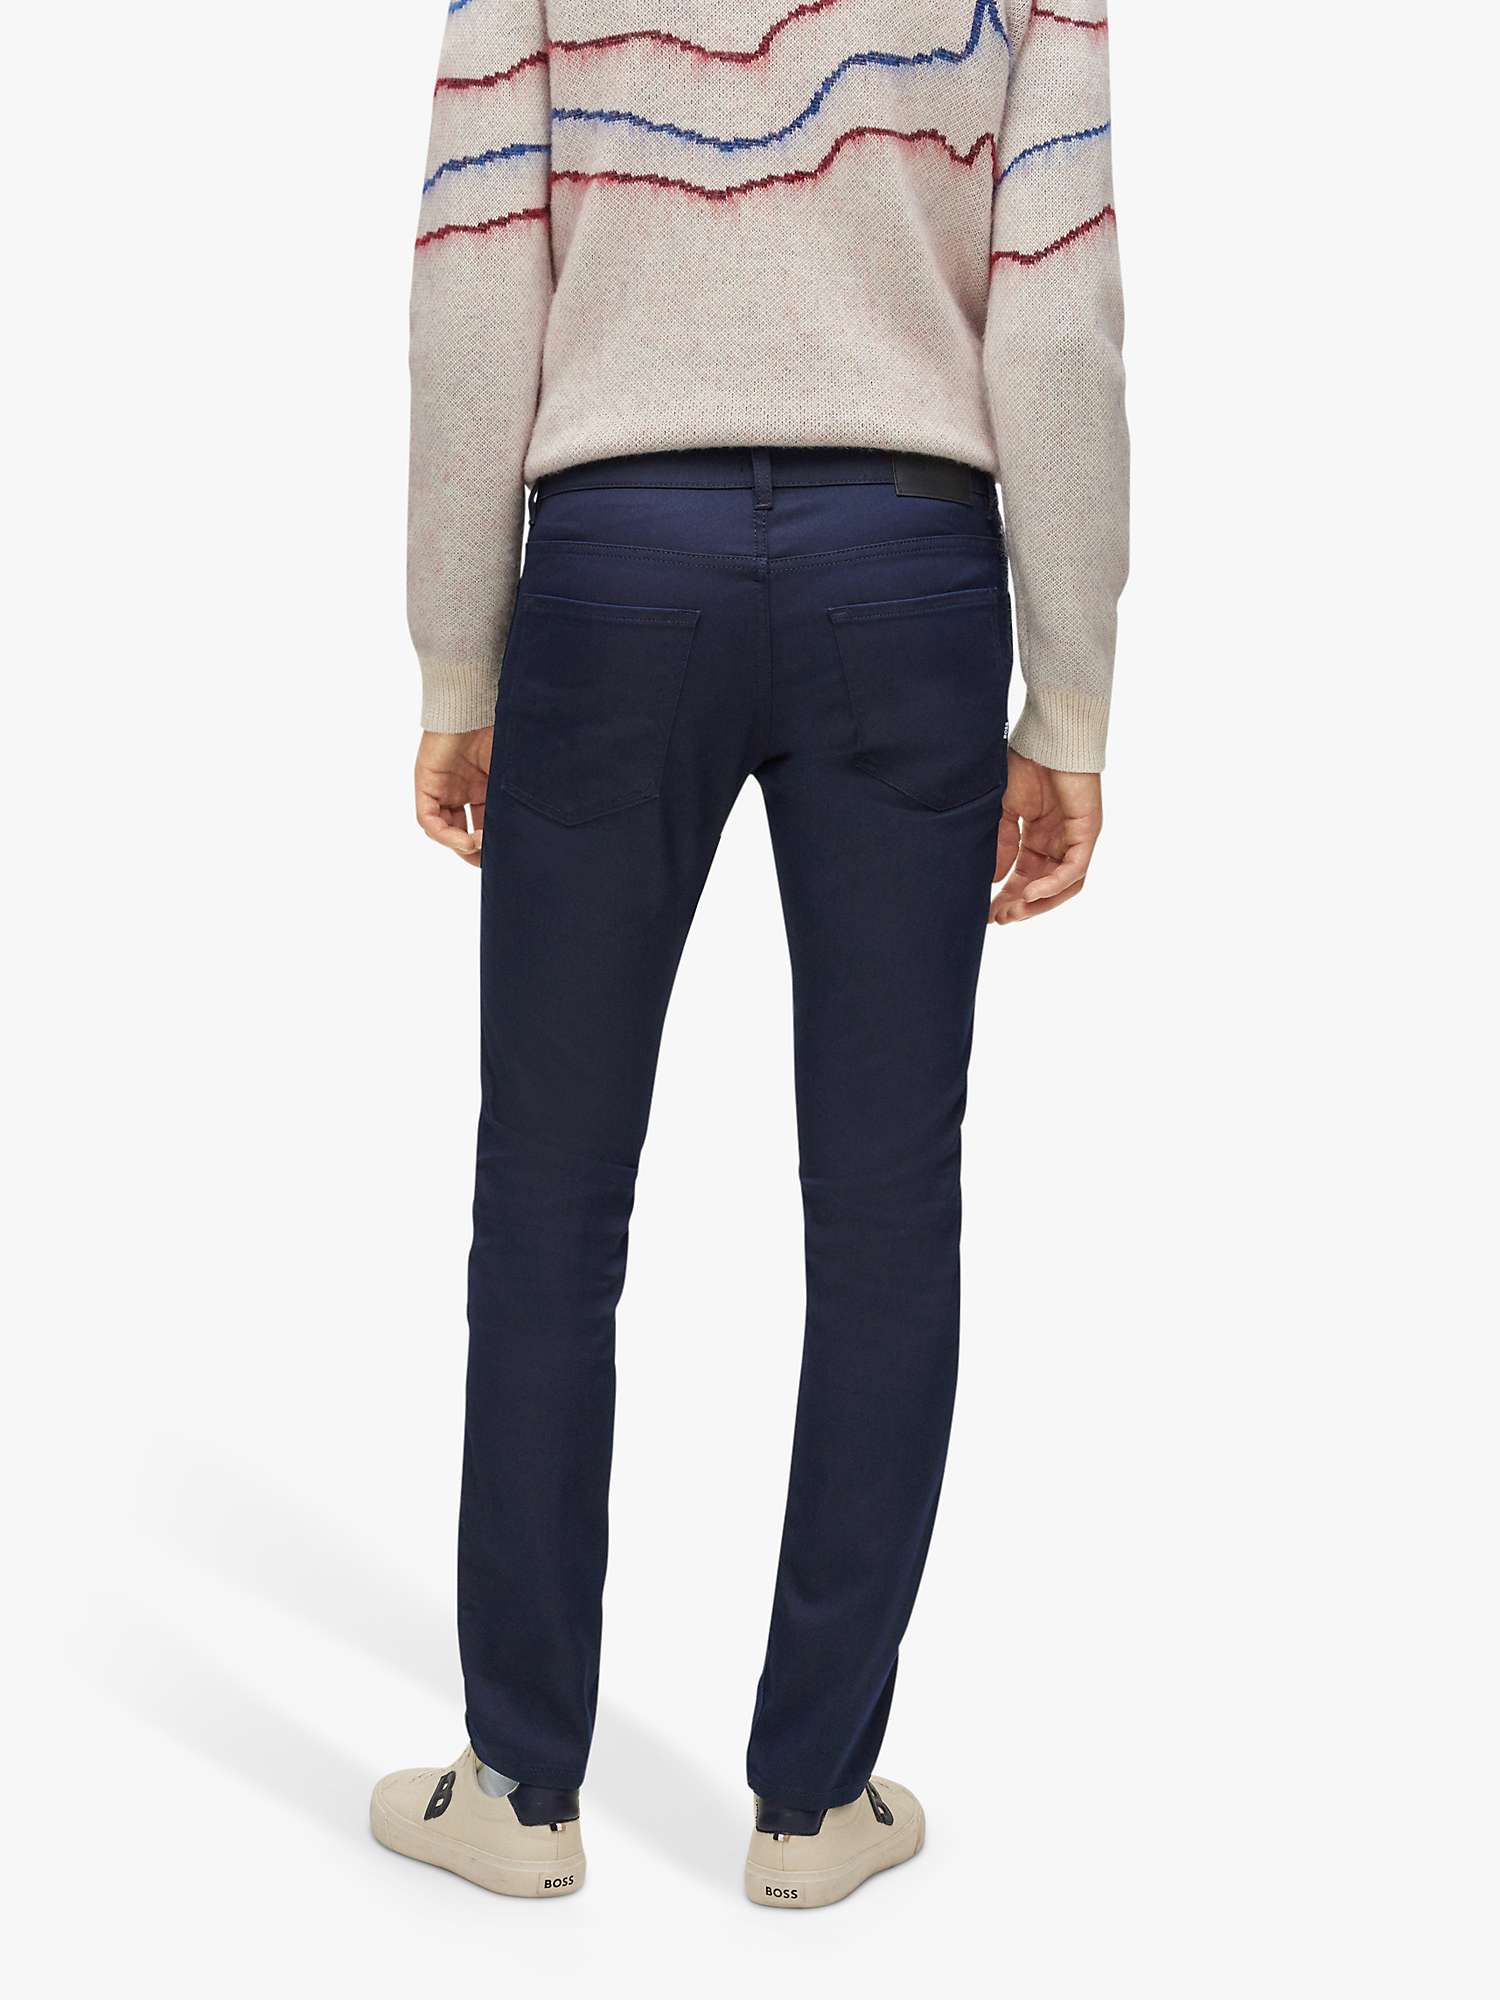 Buy BOSS Delaware3 Slim Fit Jeans, Navy Online at johnlewis.com